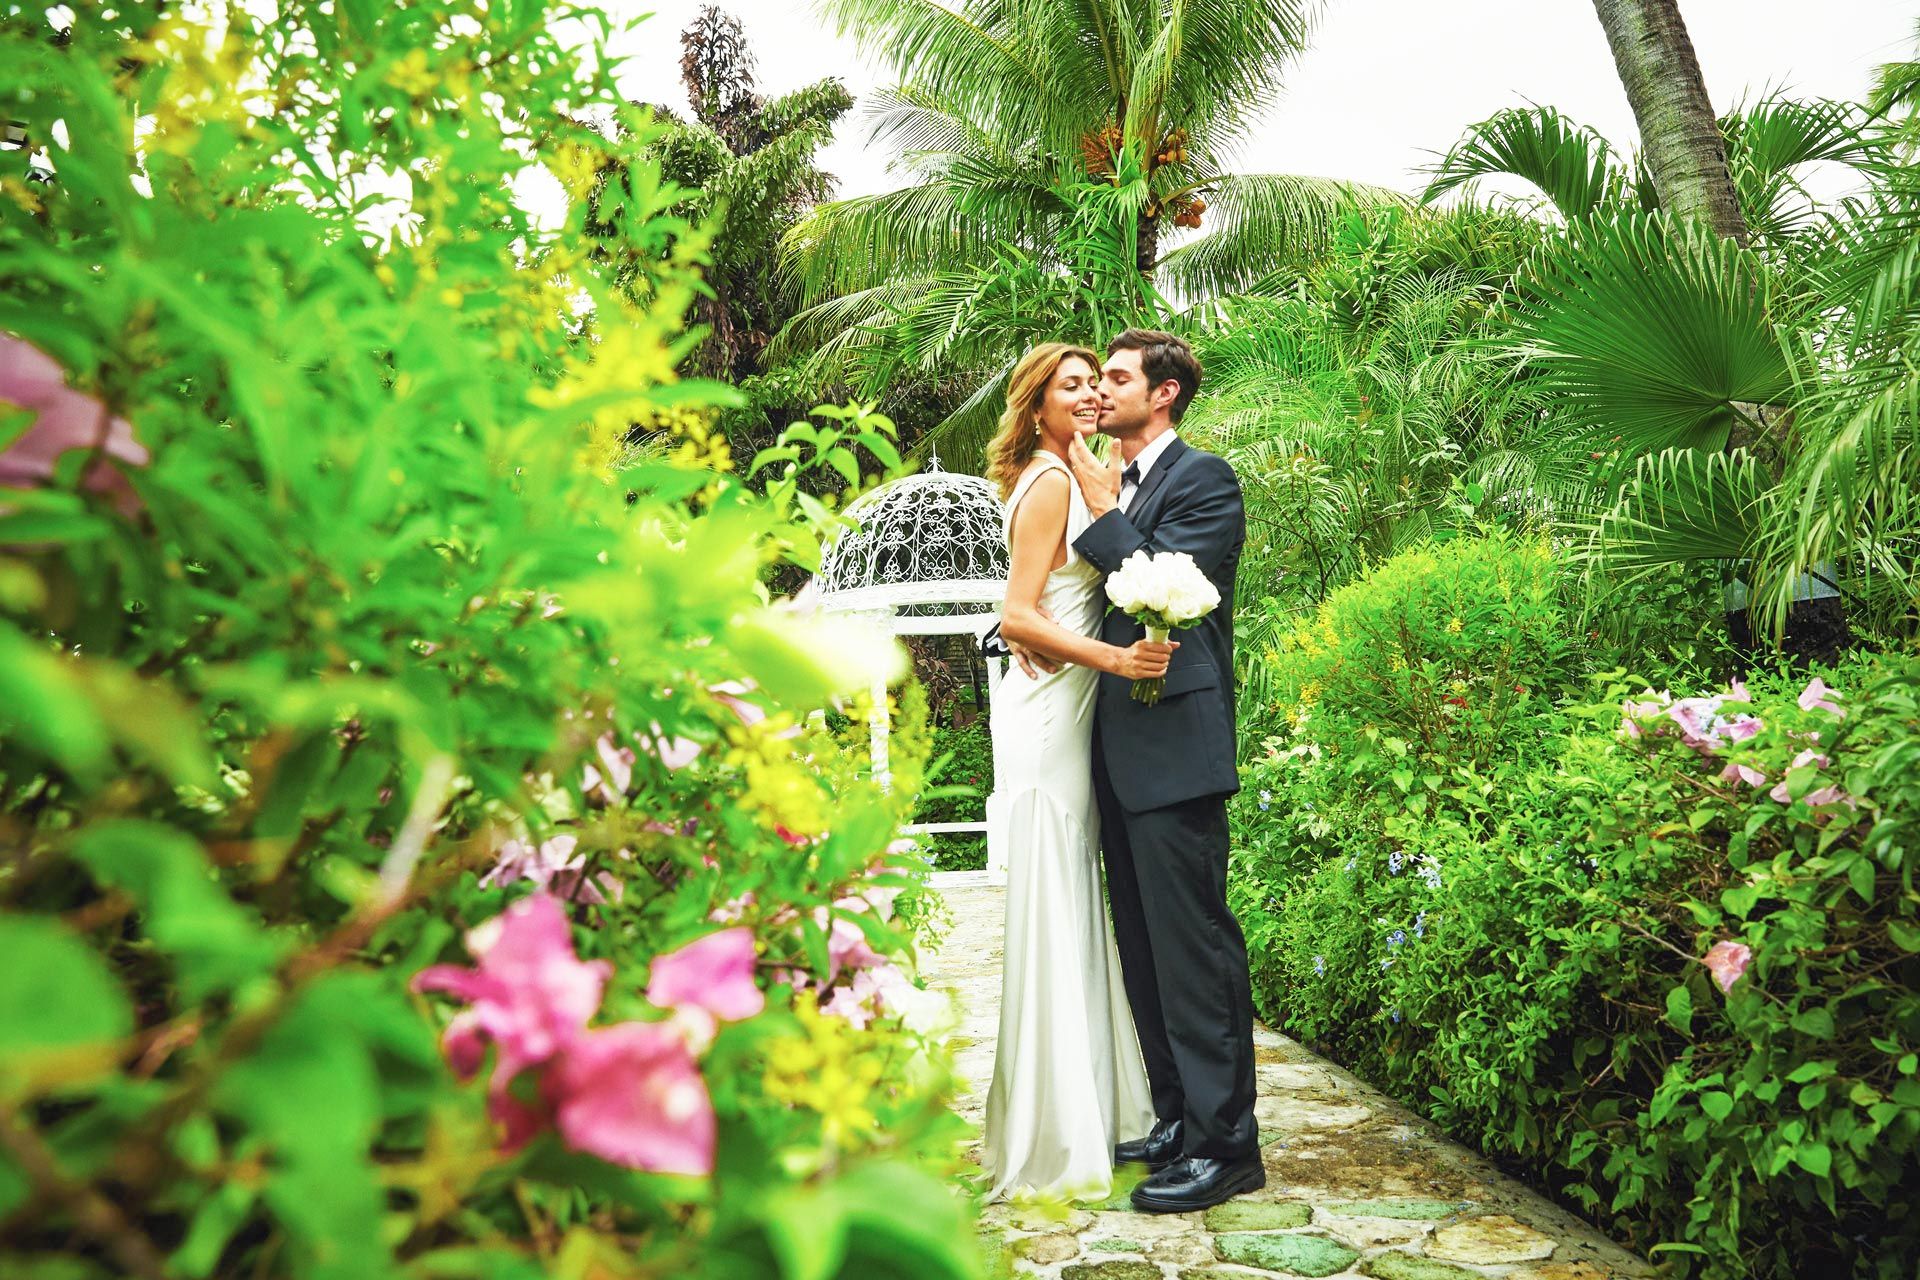 Wedding couple in gardens kissing